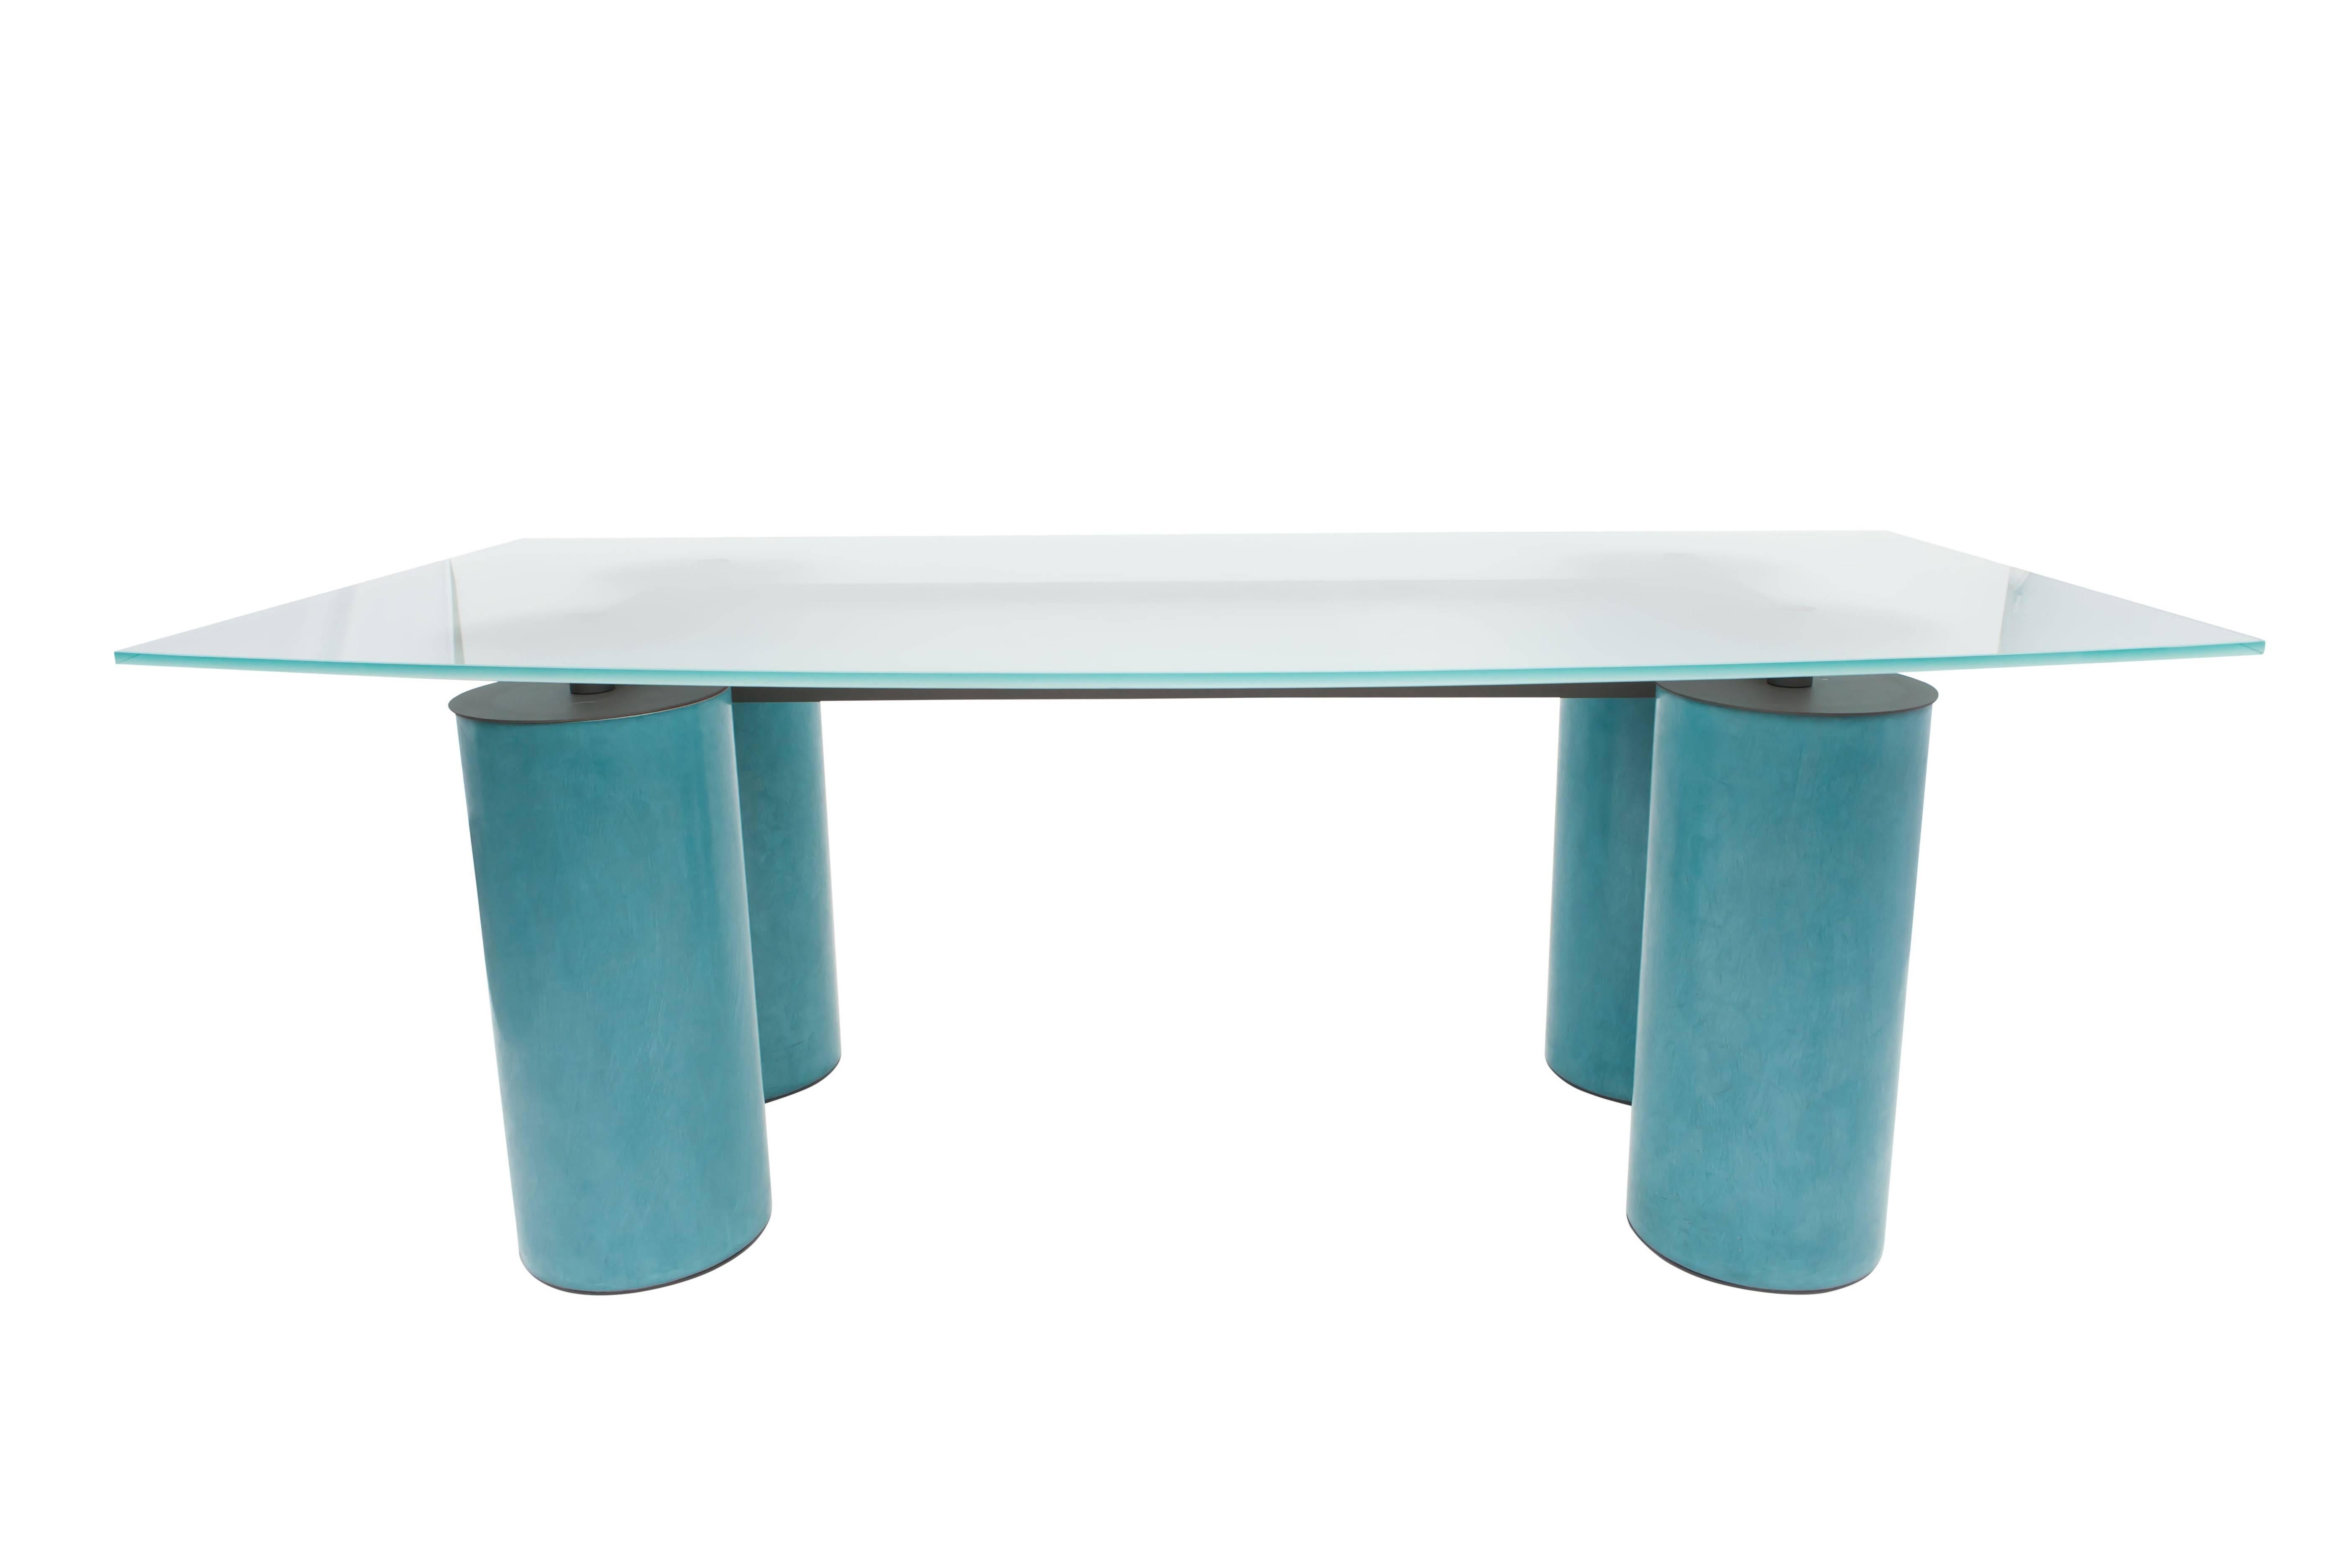 Postmodern memphis style Serenissimo Table Desk by Vignelli for Acerbis (Italienisch)